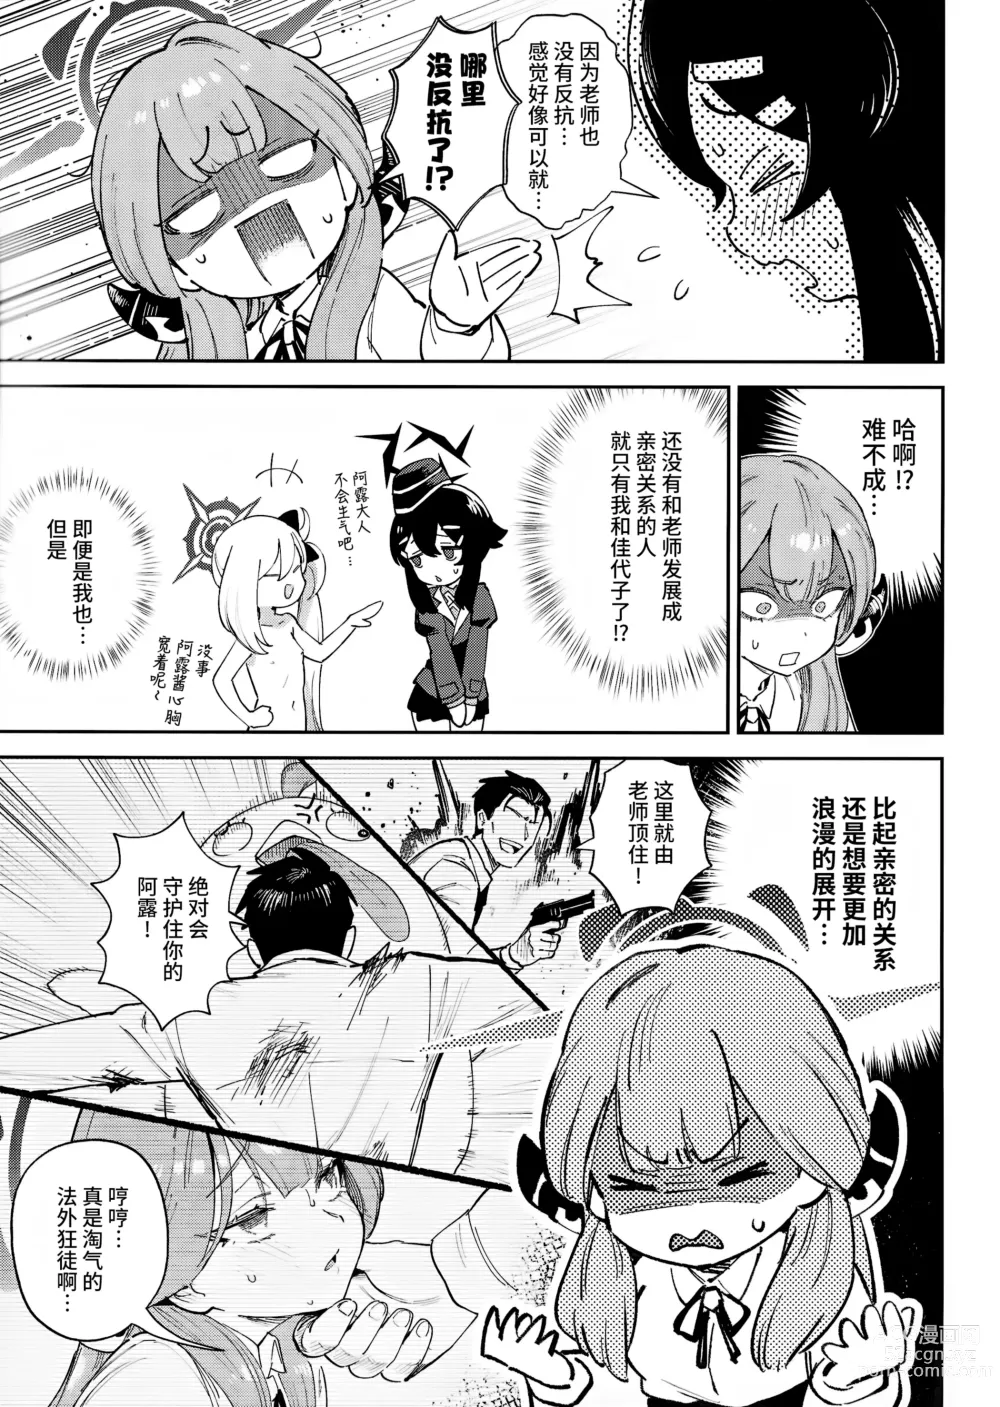 Page 12 of doujinshi 老师和学生的关系是这么开放的吗!?